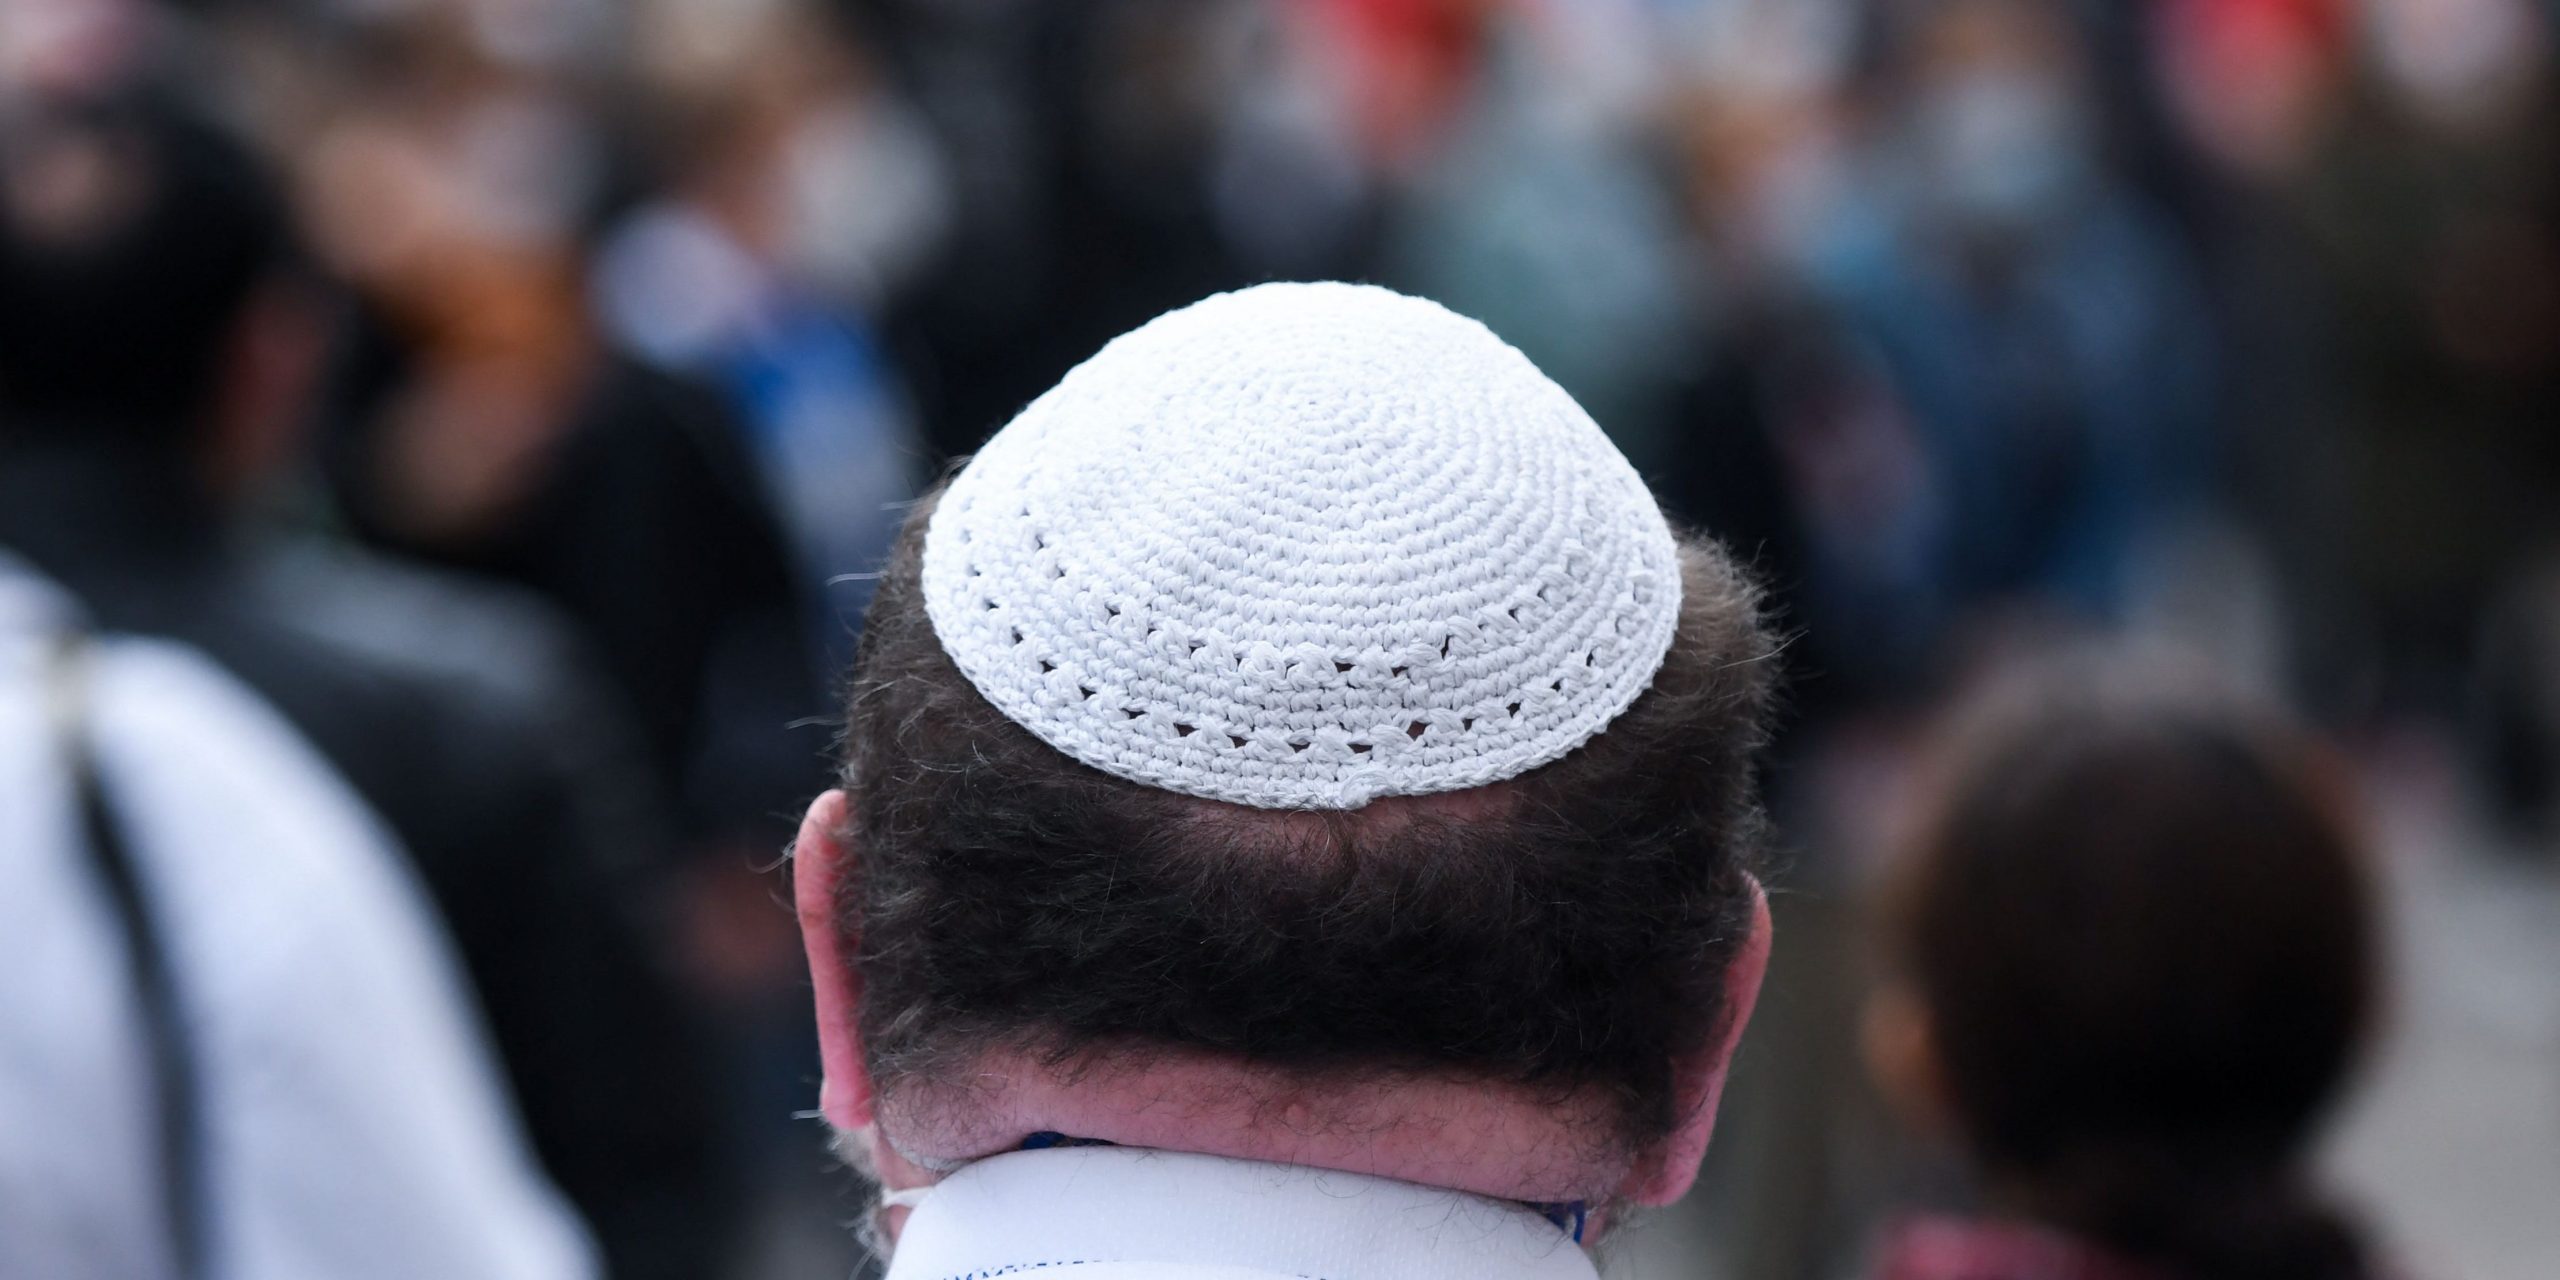 A man wearing a yarmulke